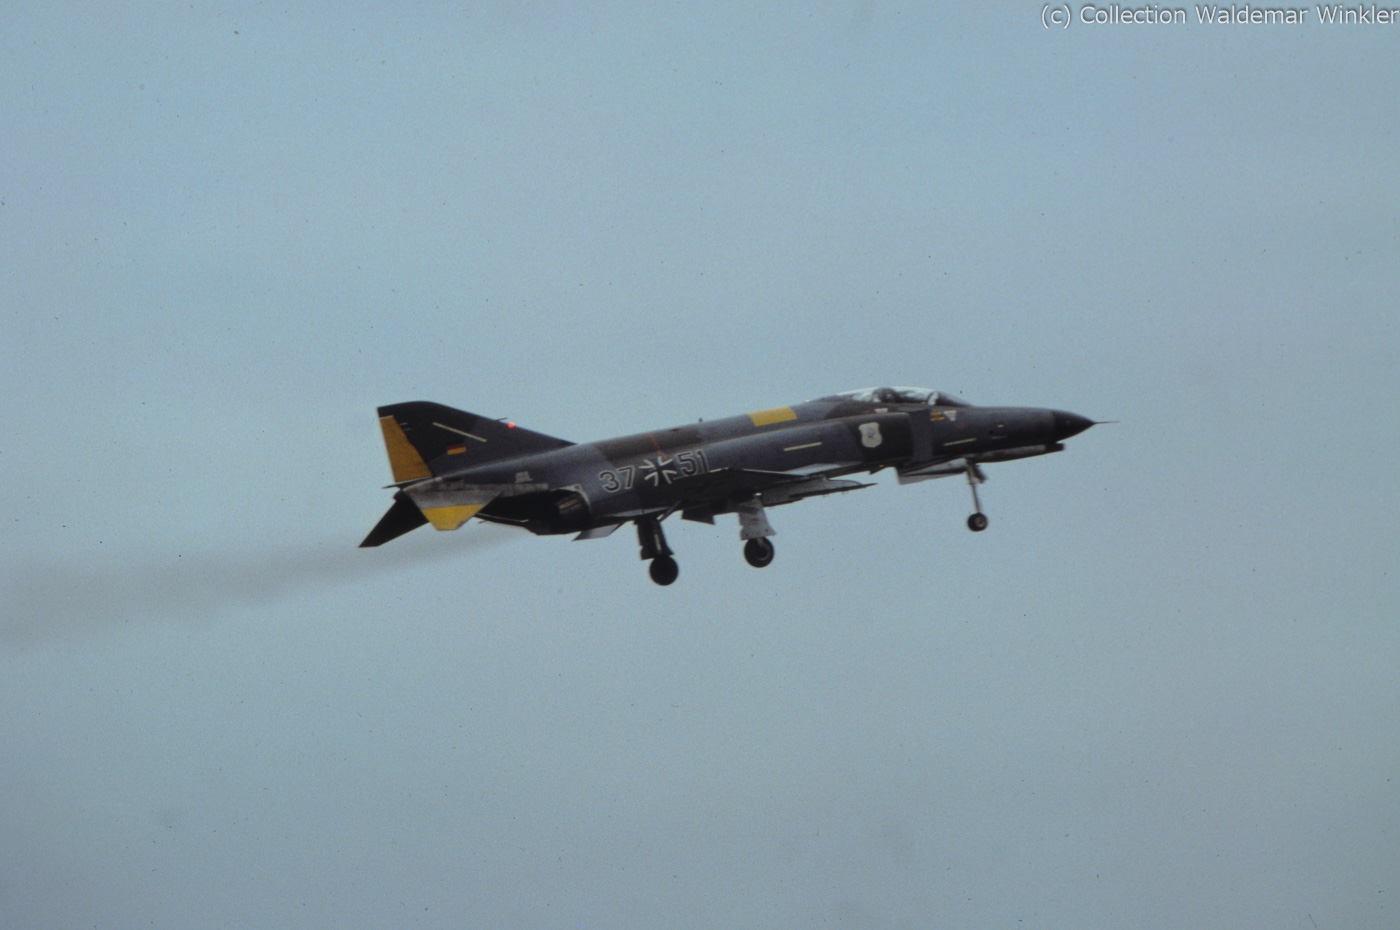 F-4_Phantom_II_DSC_1039.jpg